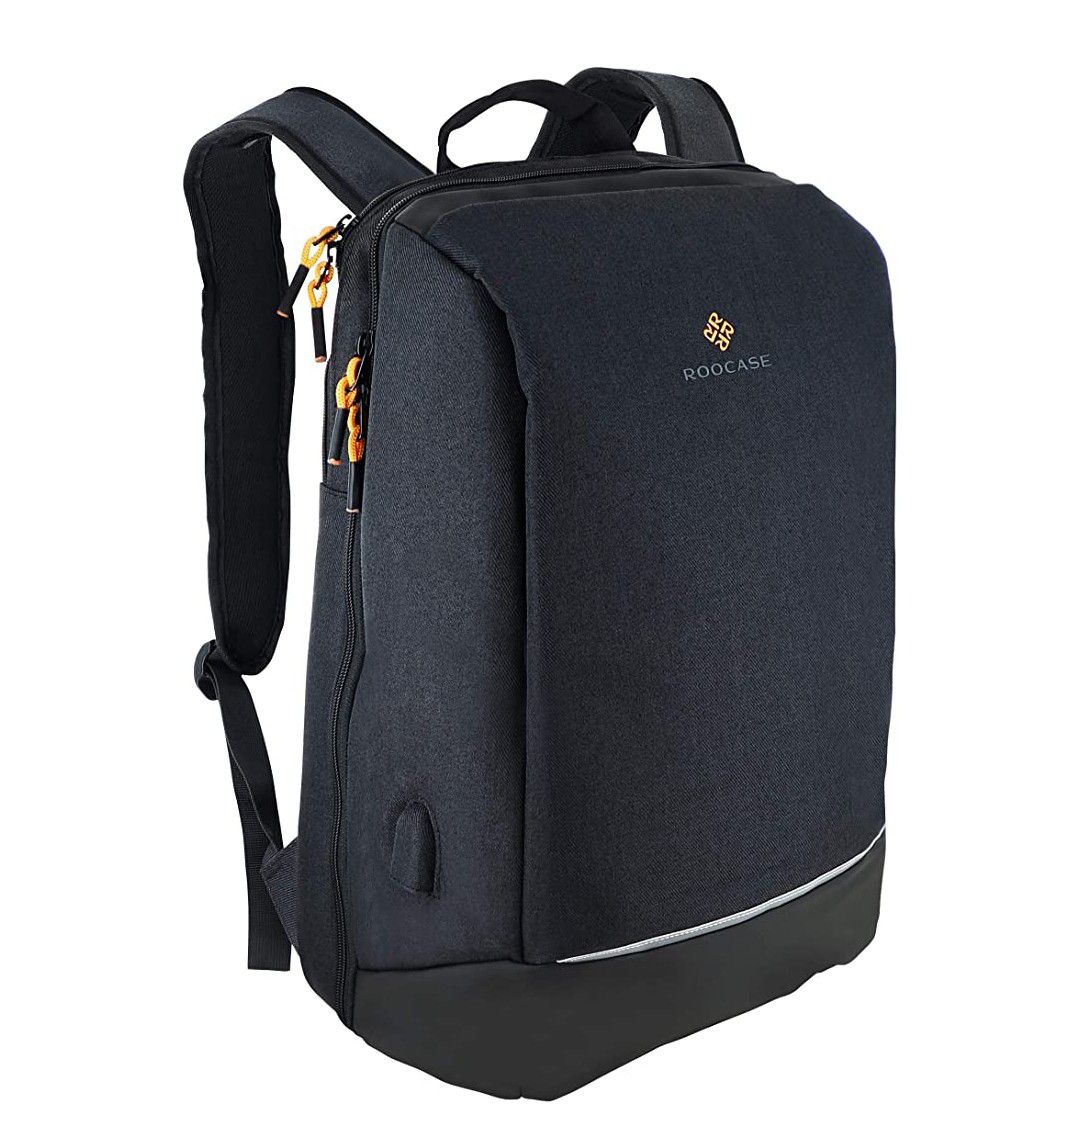 Backpack - Business, Travel, Work Backpack